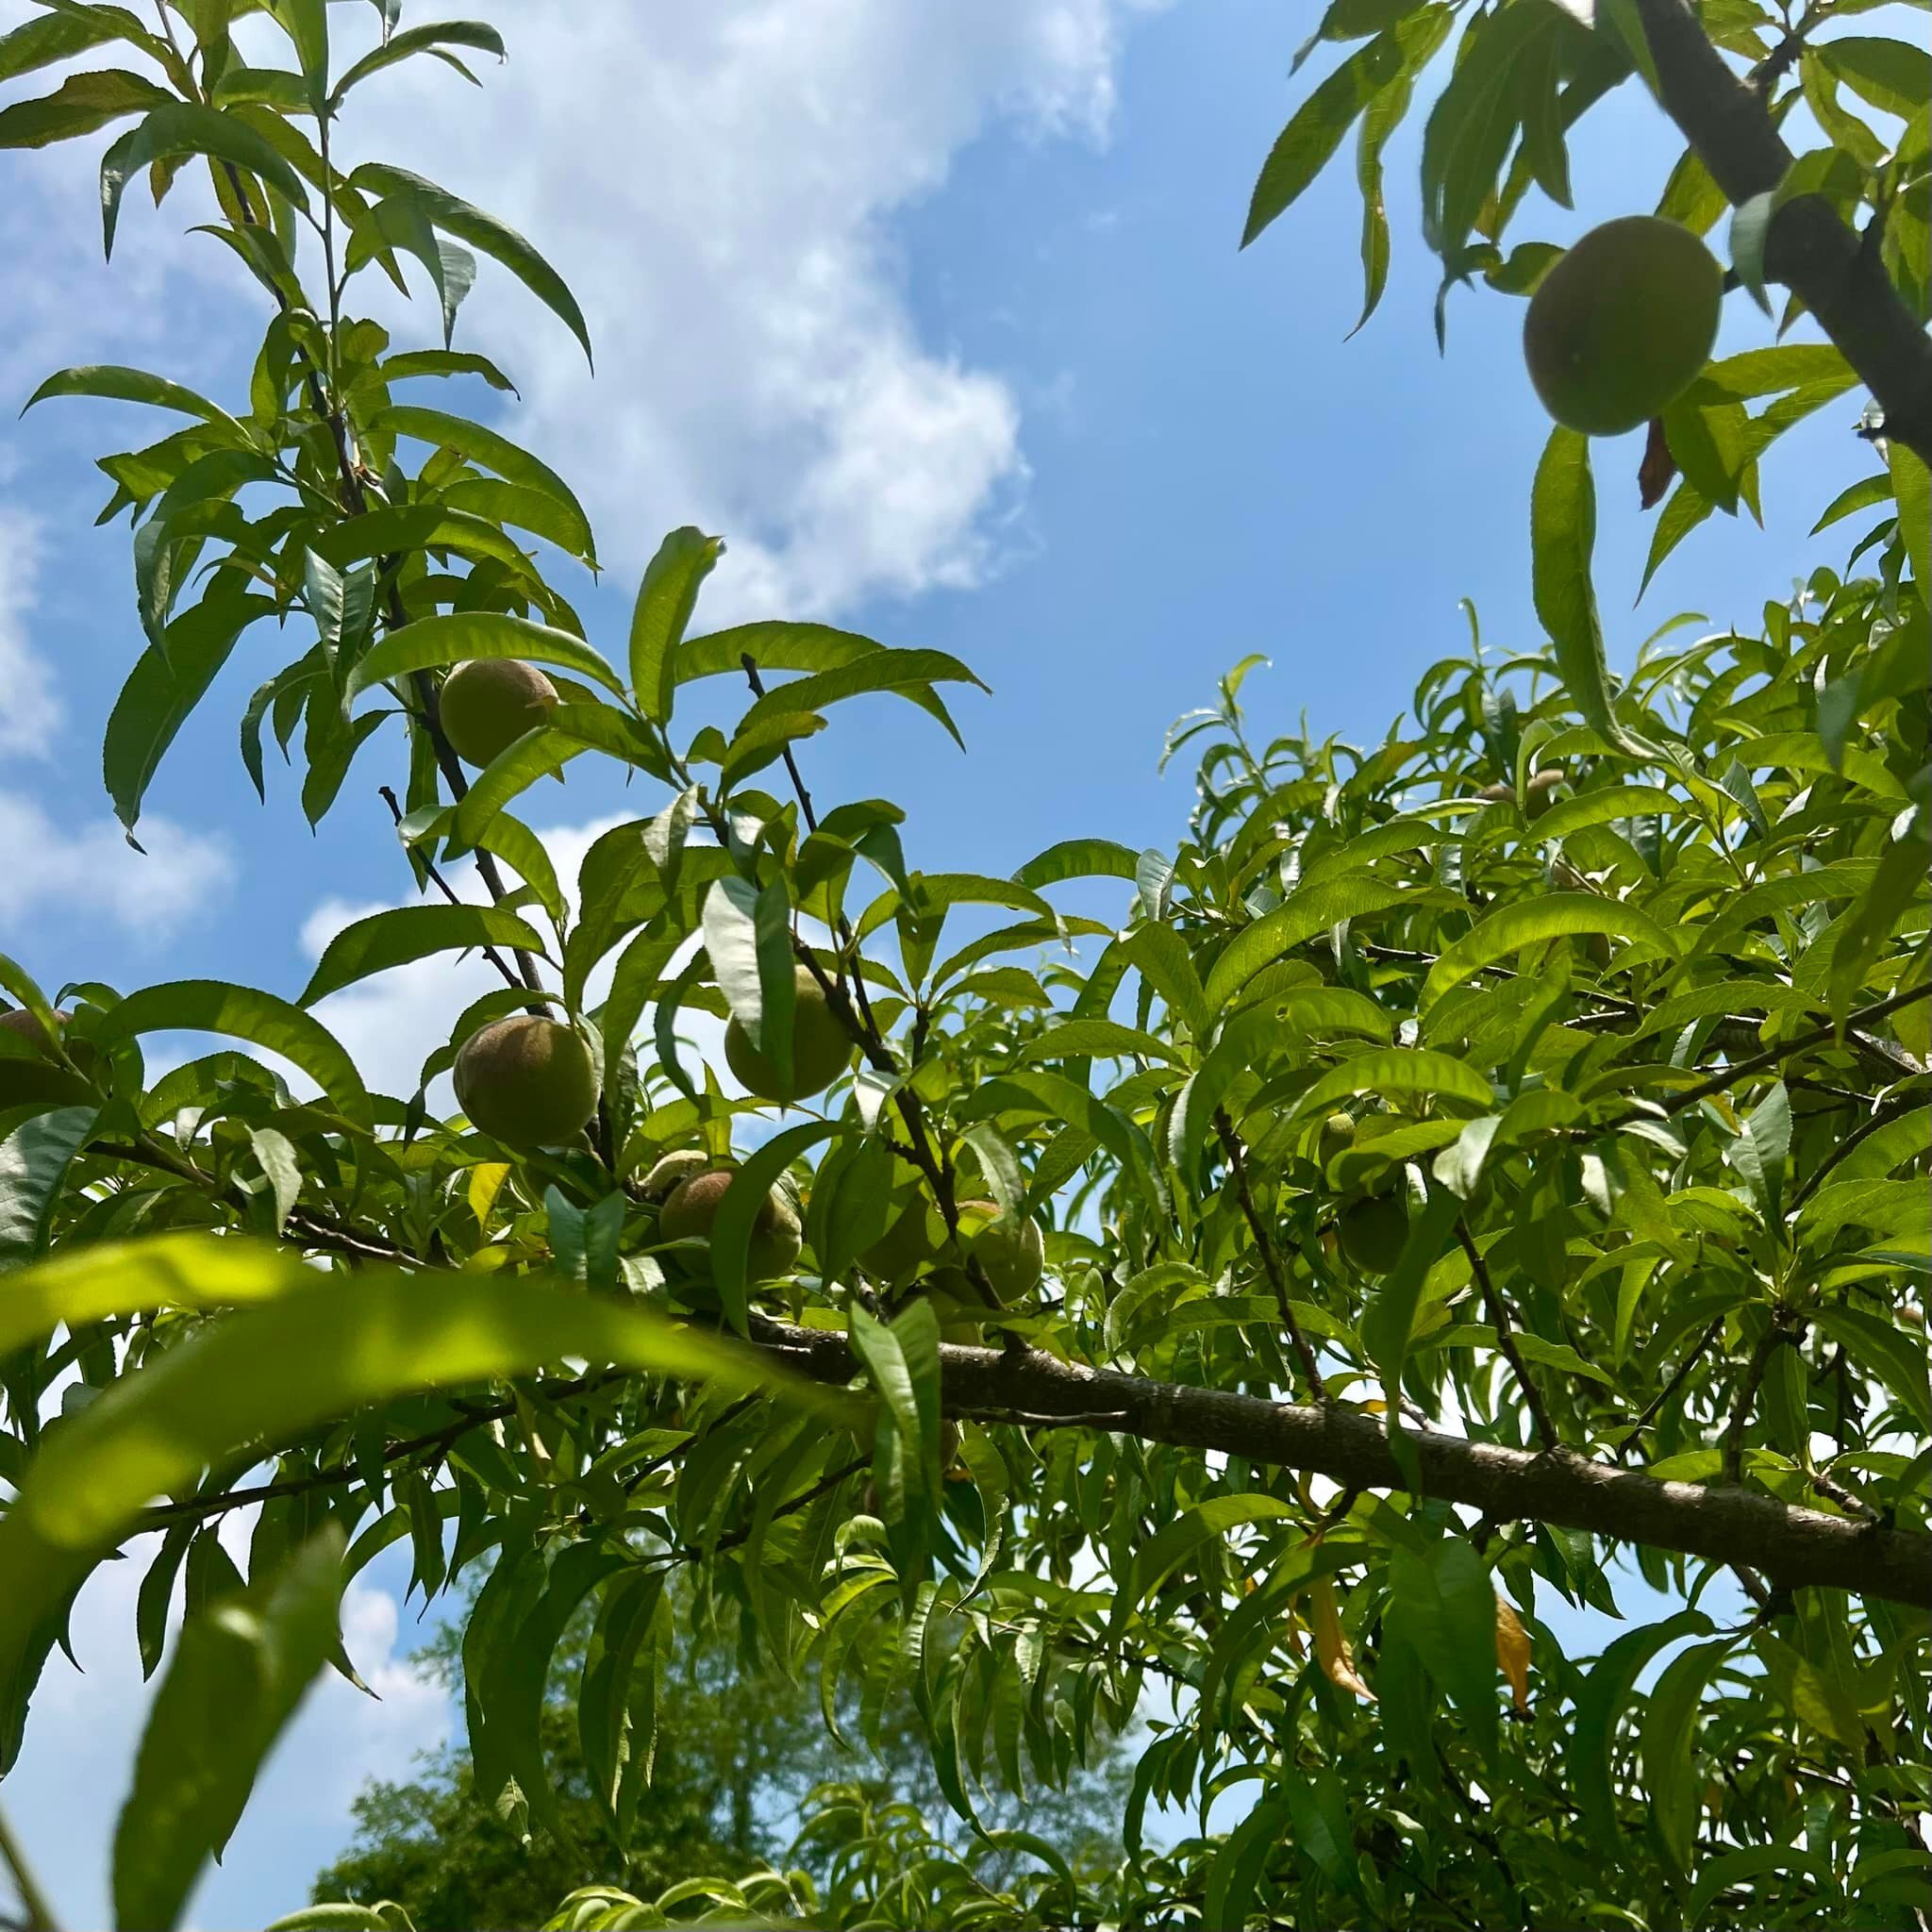 We discovered we have a peach tree on the property. 😊 #trees #homesteadlife #springtime #peaches #fruittrees #Georgia #blueridgemountains #FruitBearingTrees #5acres